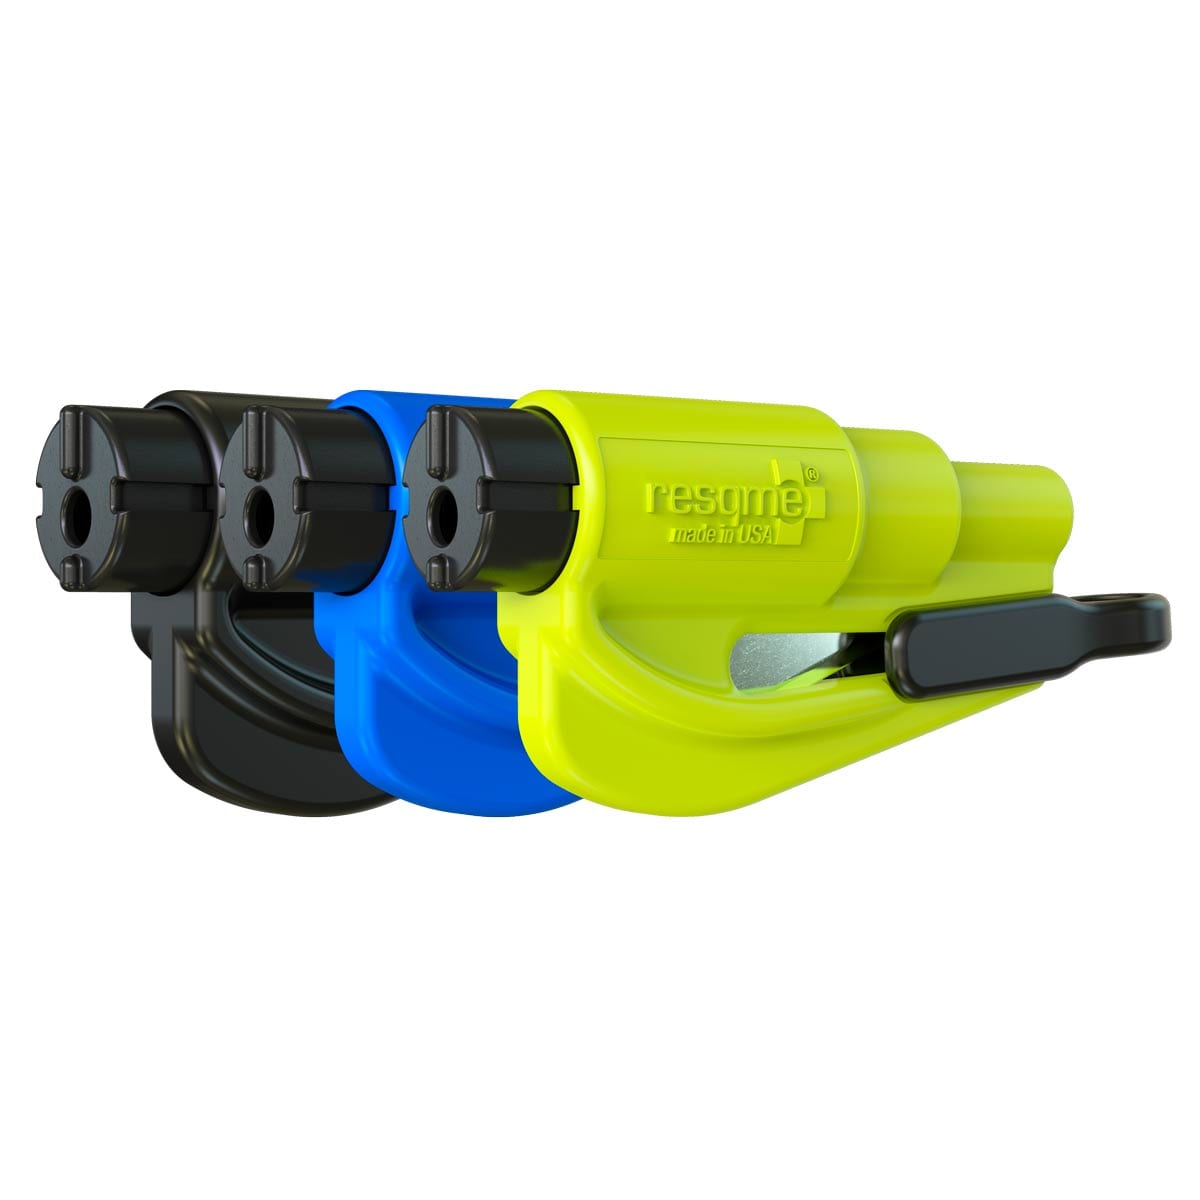 resqme® Car Escape Tool, Seatbelt Cutter / Window Breaker - Pack of 3 Black, Blue & Safety Yellow